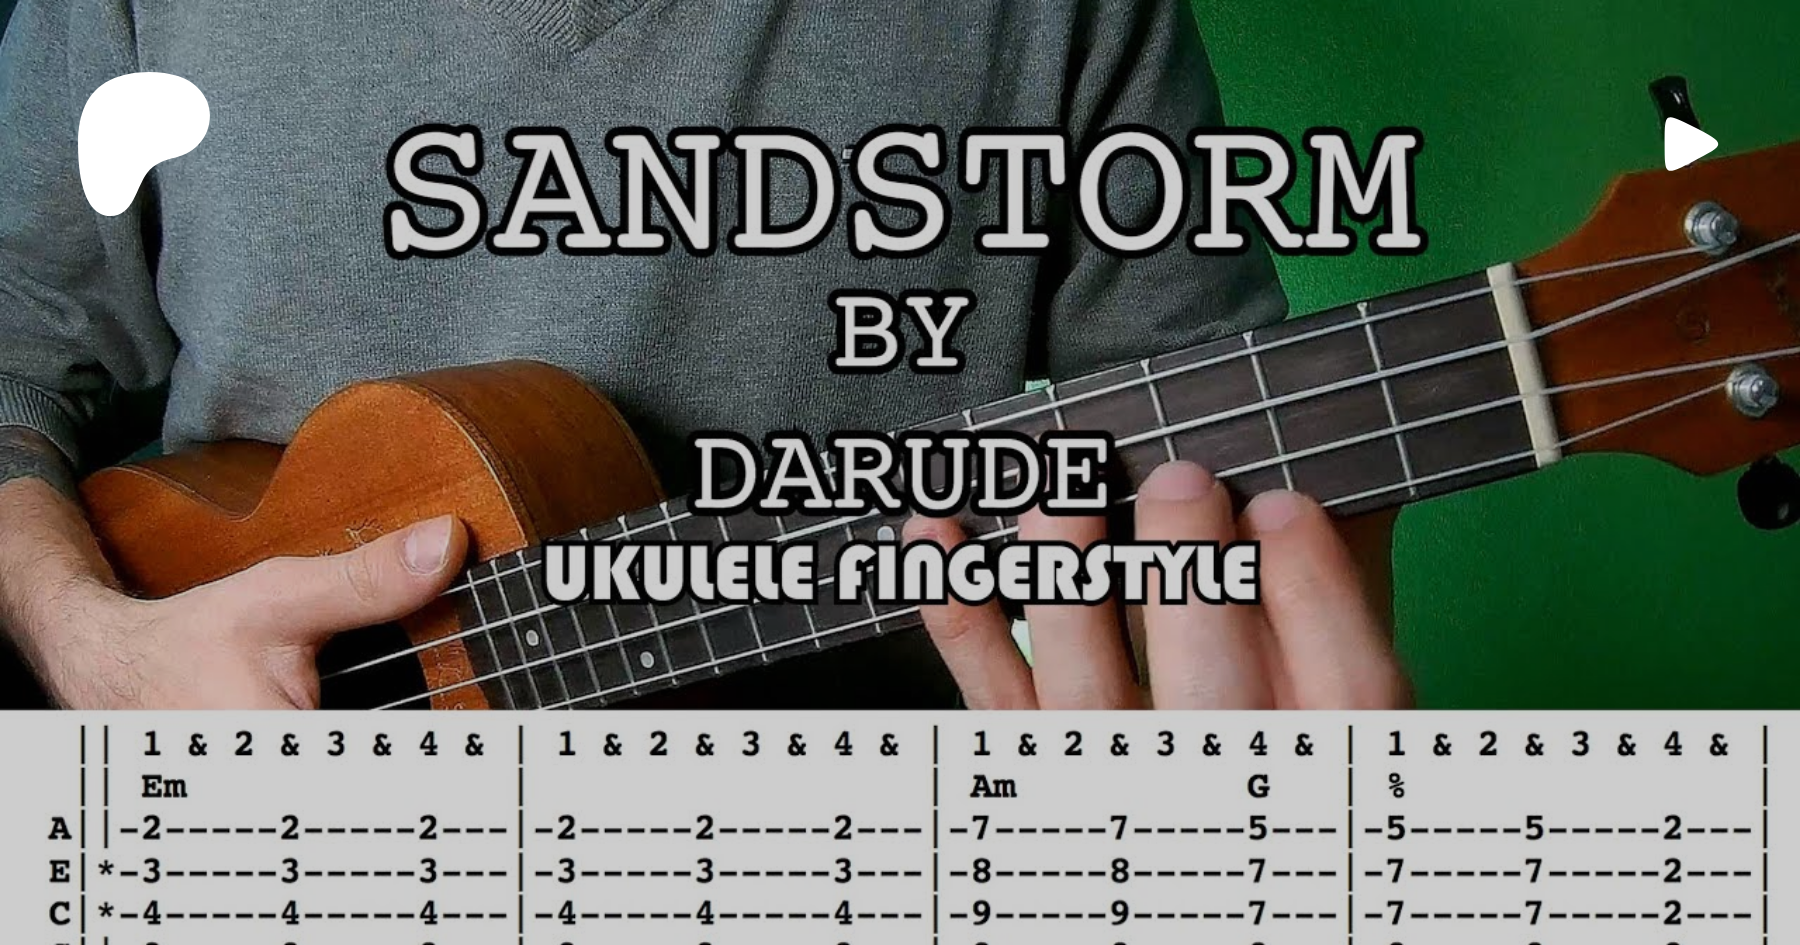 SANDSTORM by Darude Ukulele Fingerstyle with TABS | Profesor de Ukelele | Sebastian Pabon on Patreon